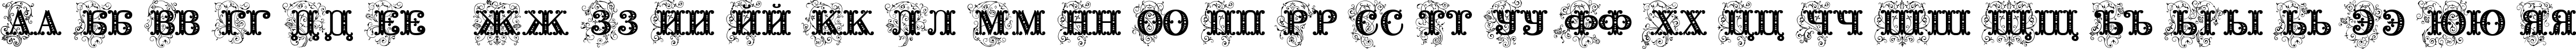 Пример написания русского алфавита шрифтом Barocco Floral Initial